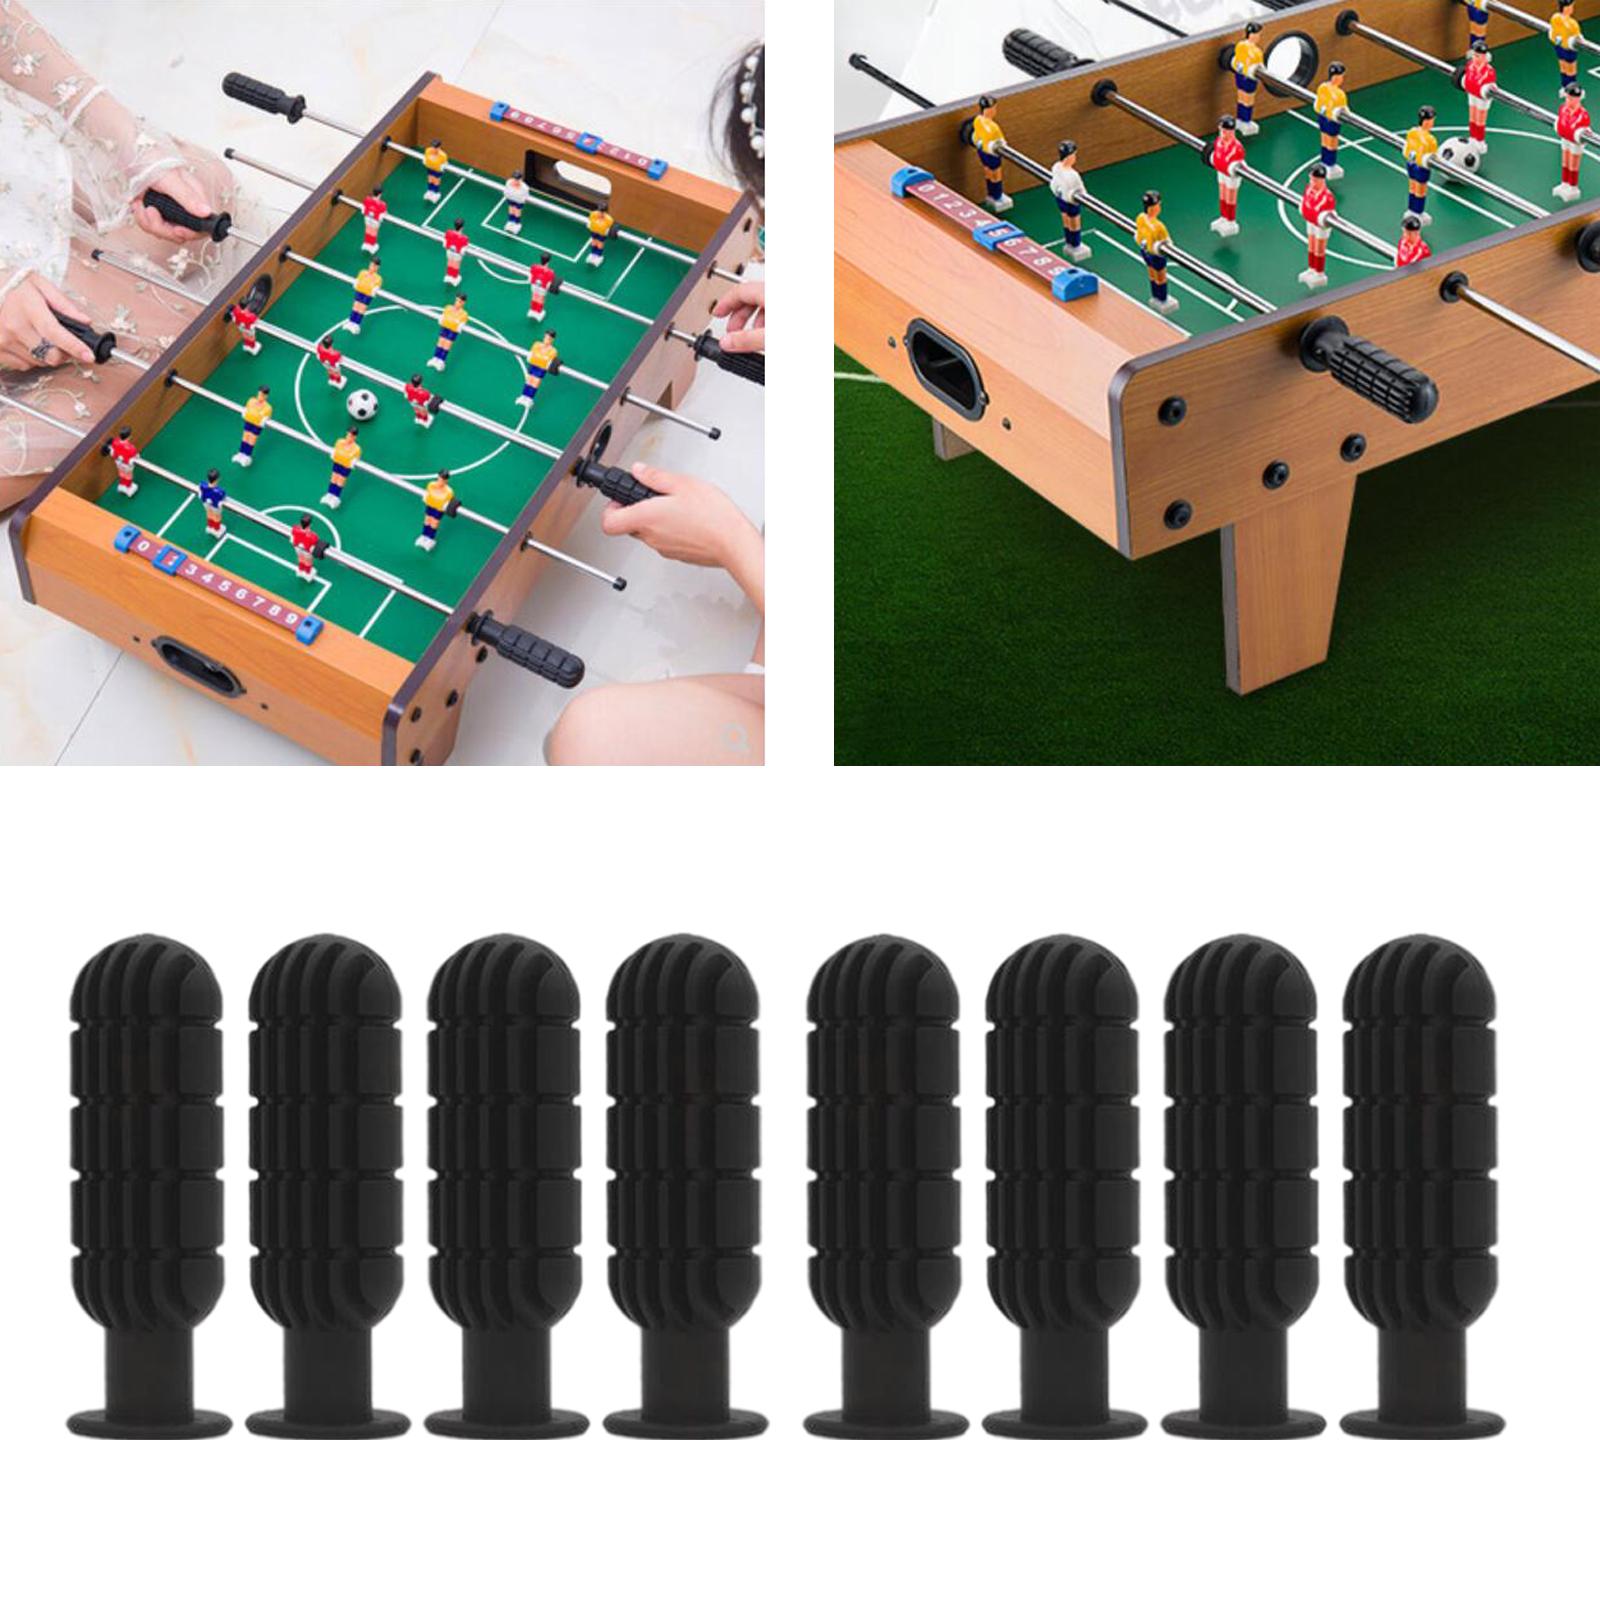 8x Foosball Handle Grips Soccer Table Handles for Standard Foosball Table